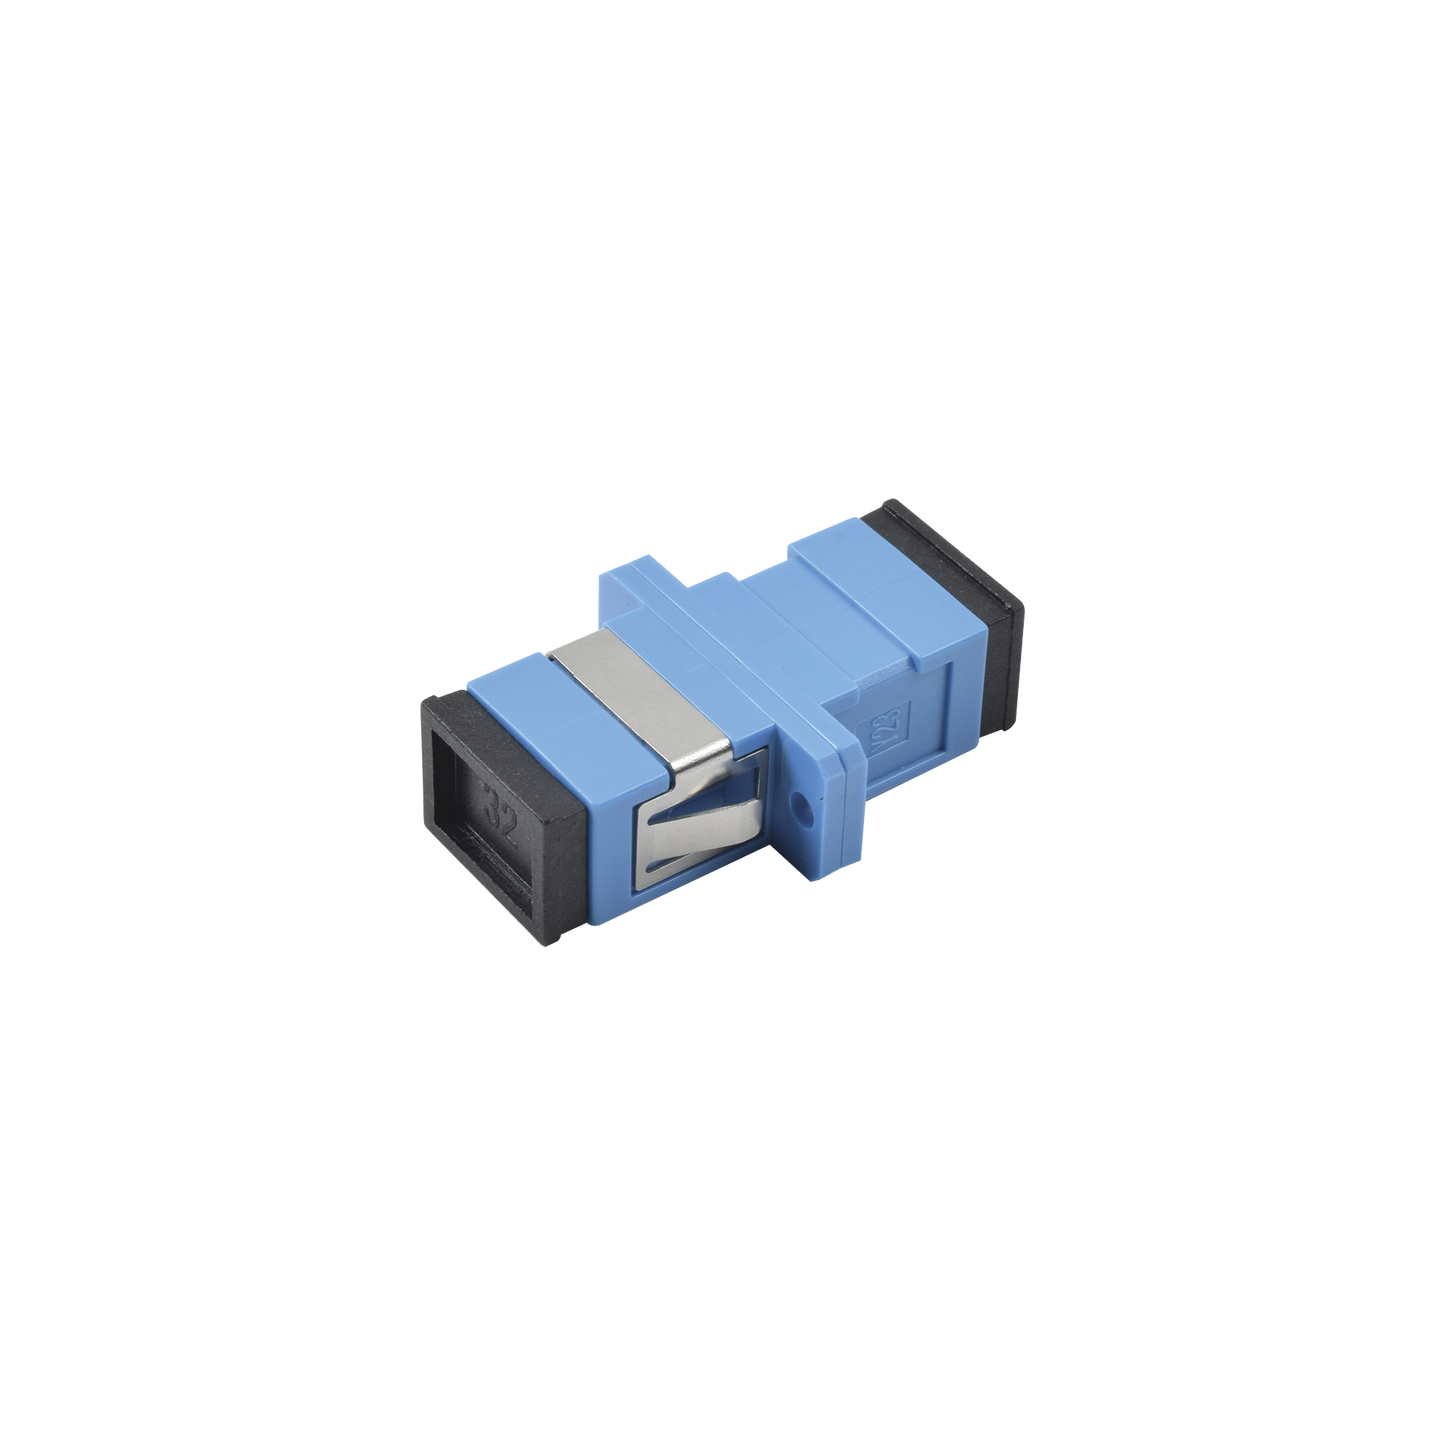 Simplex Fiber Optic Coupler Module SC / PC to SC / PC Compatible with Single Mode Fiber